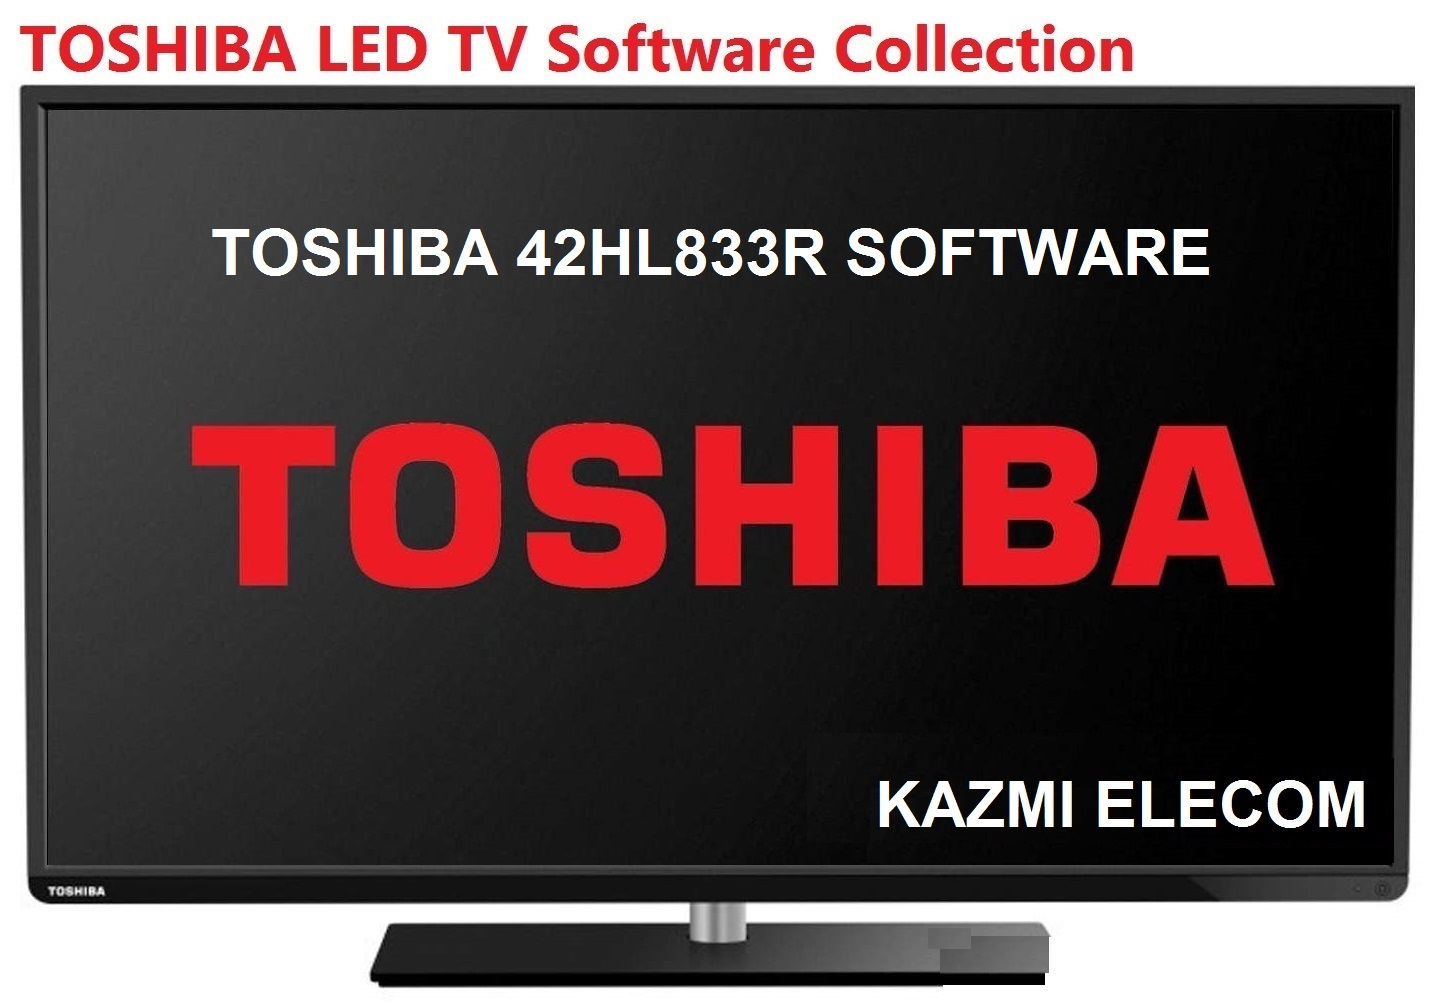 Toshiba 42Hl833R